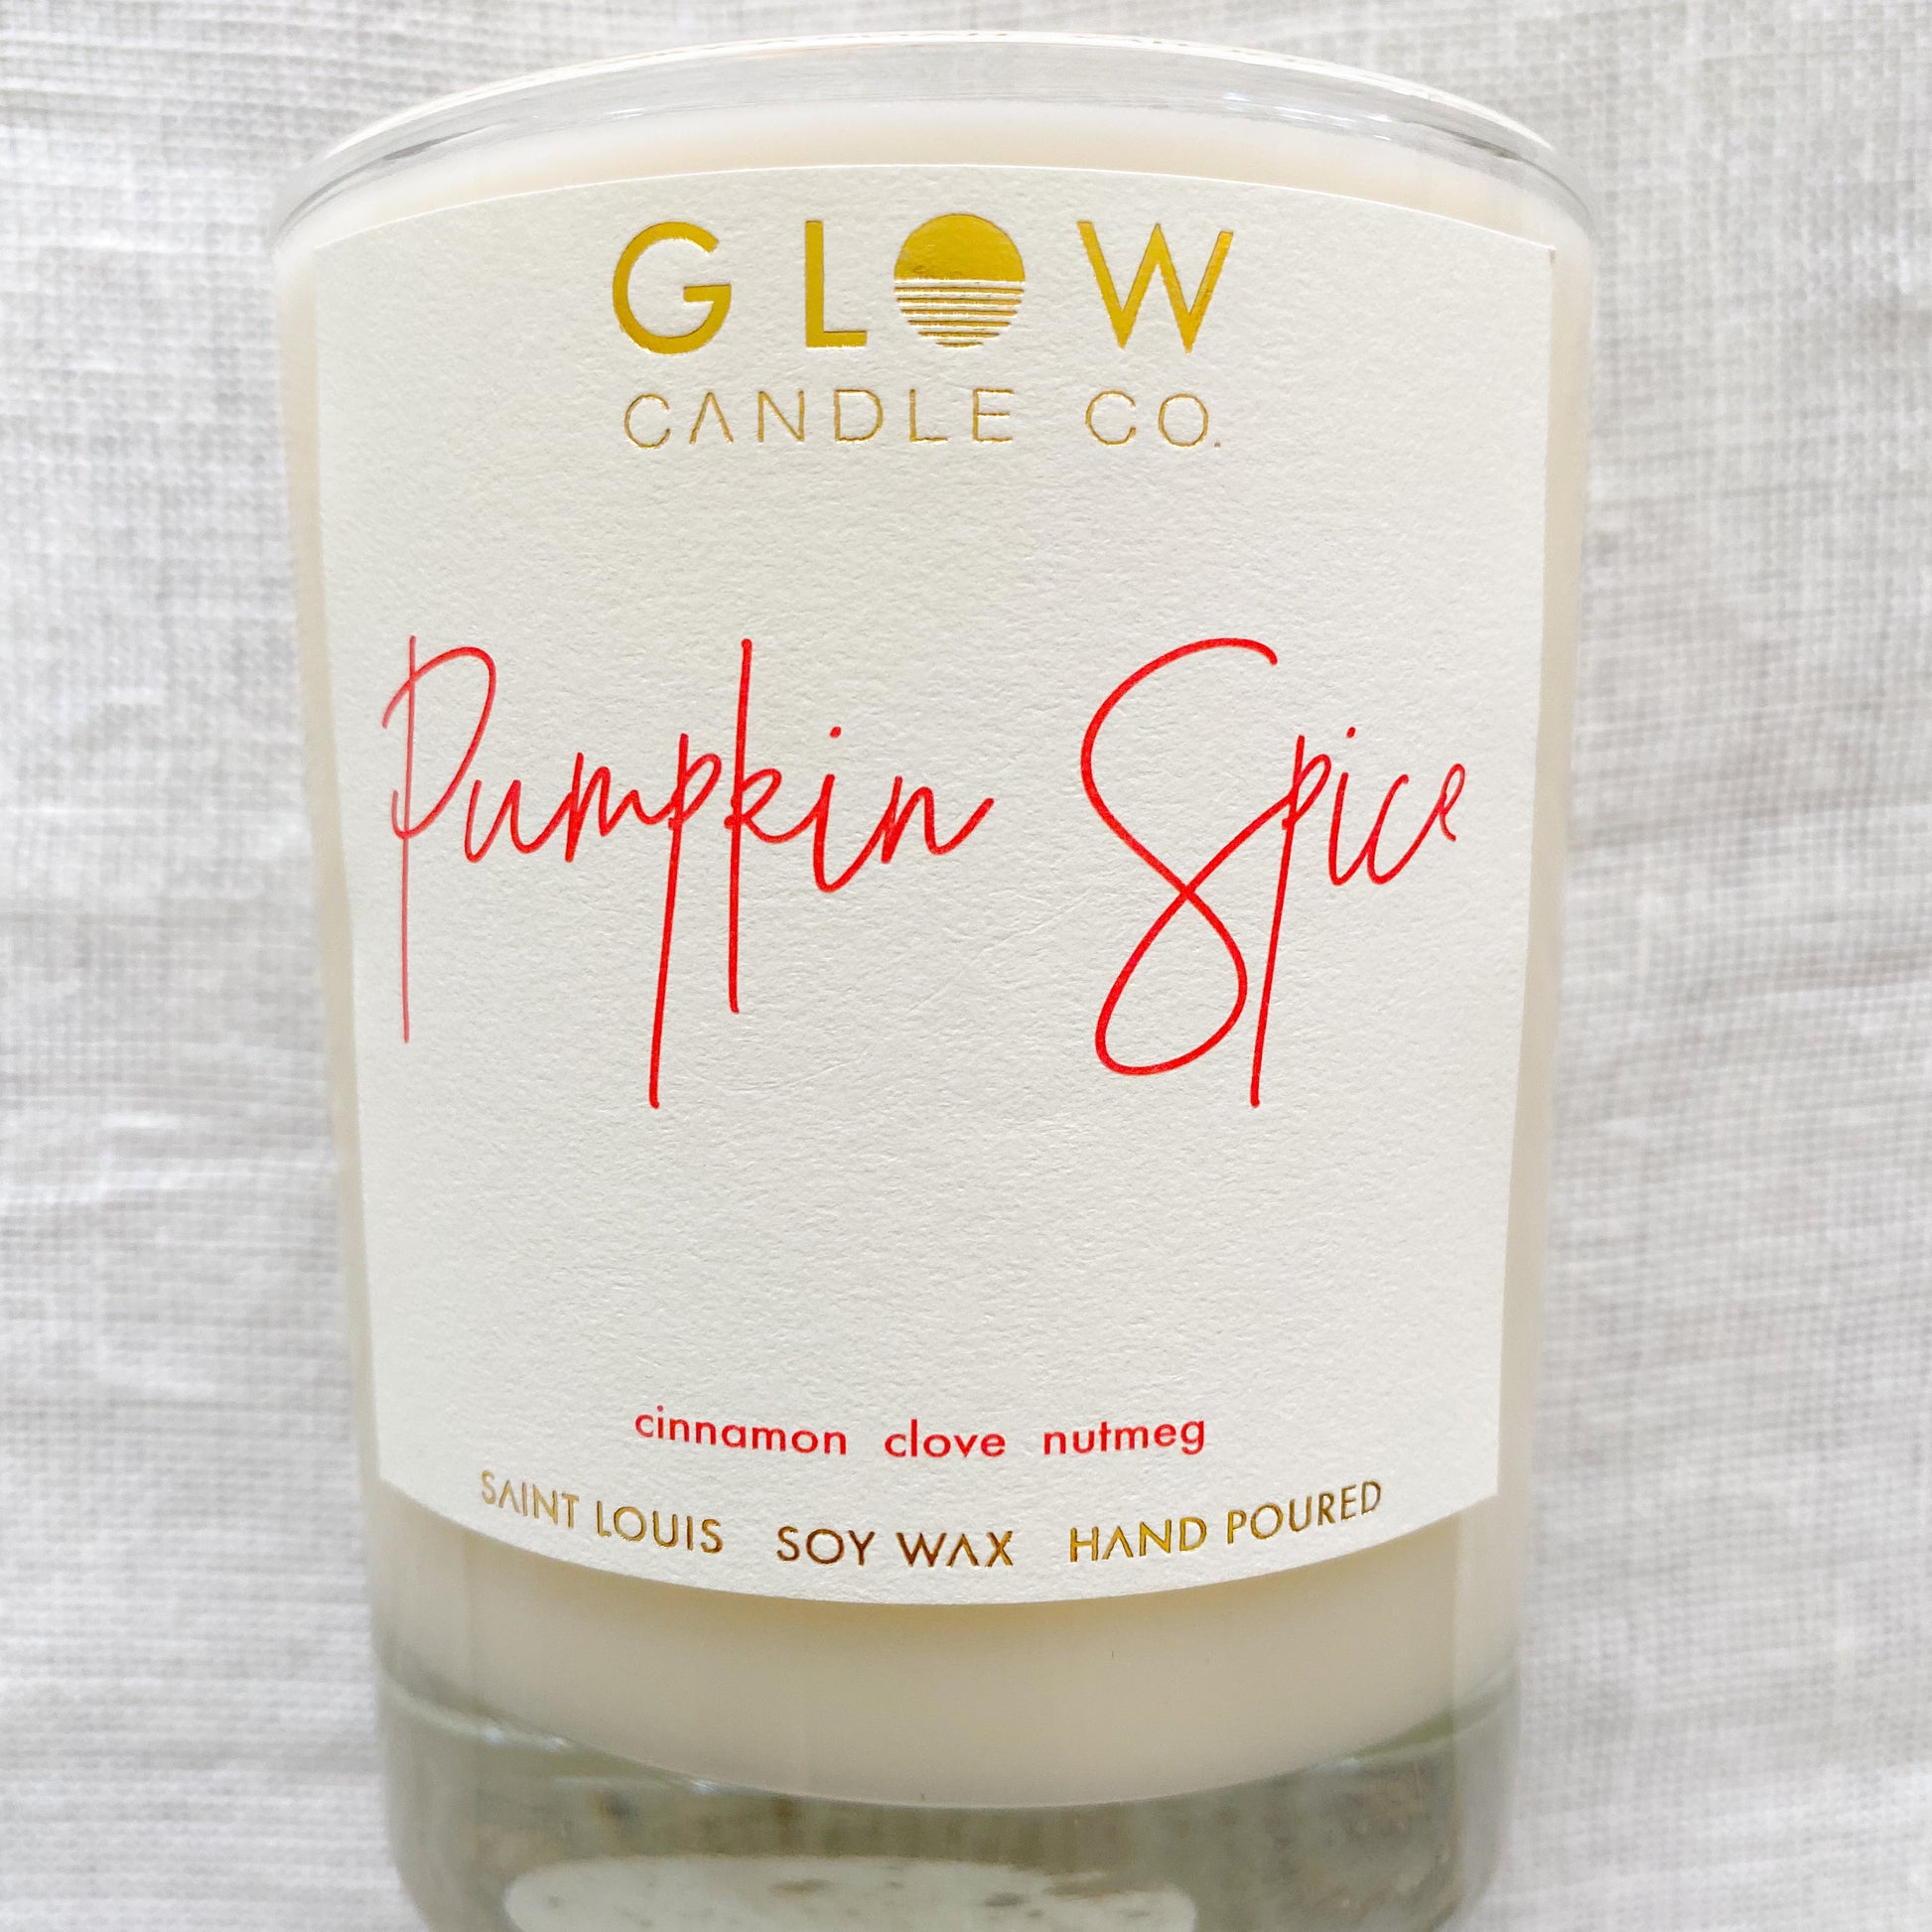 GLOW Pumpkin Pie Spice Candle